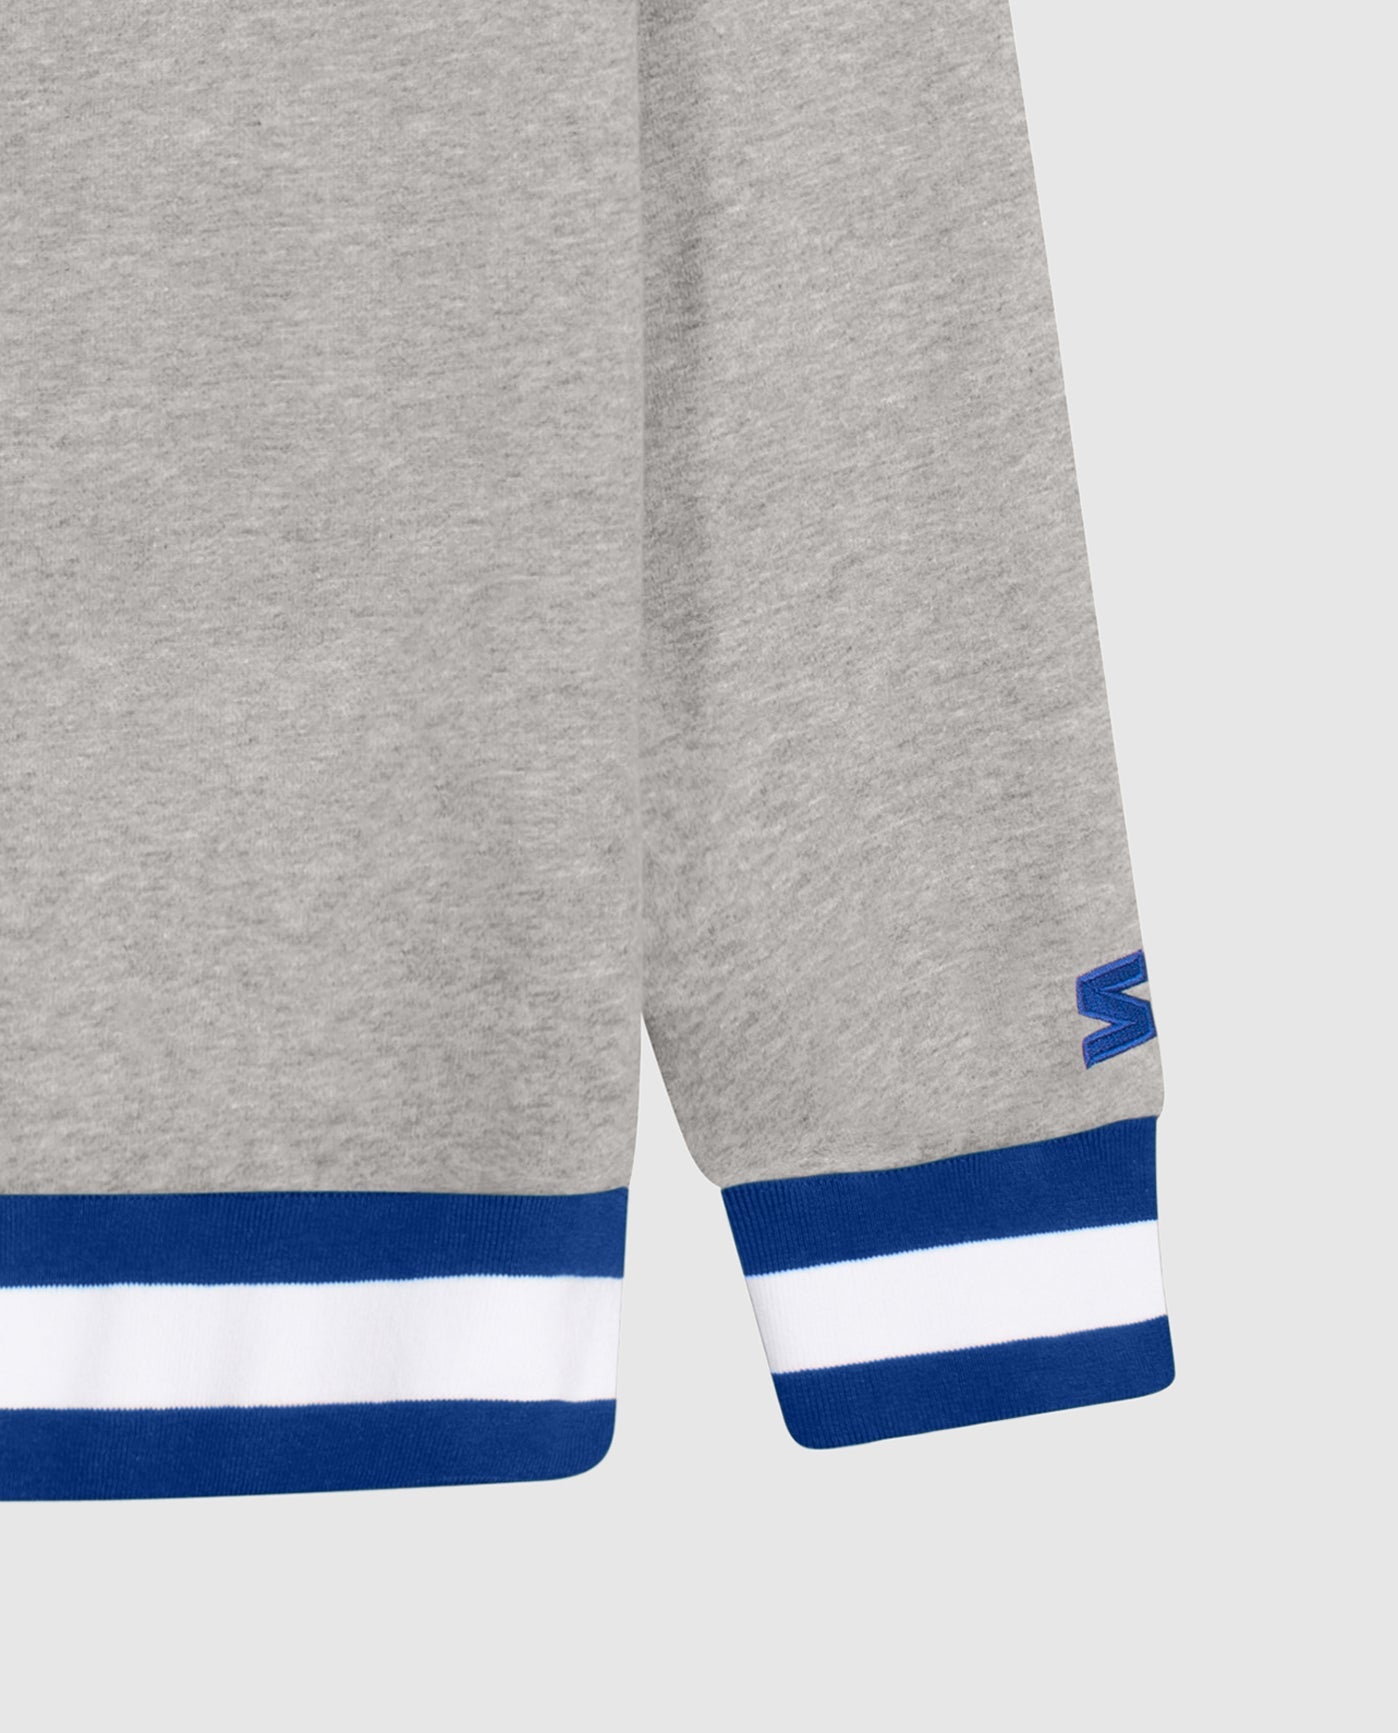 Sleeve Cuff and Waistband of New York Giants Knit Hoodie Sweatshirt | Heather Grey